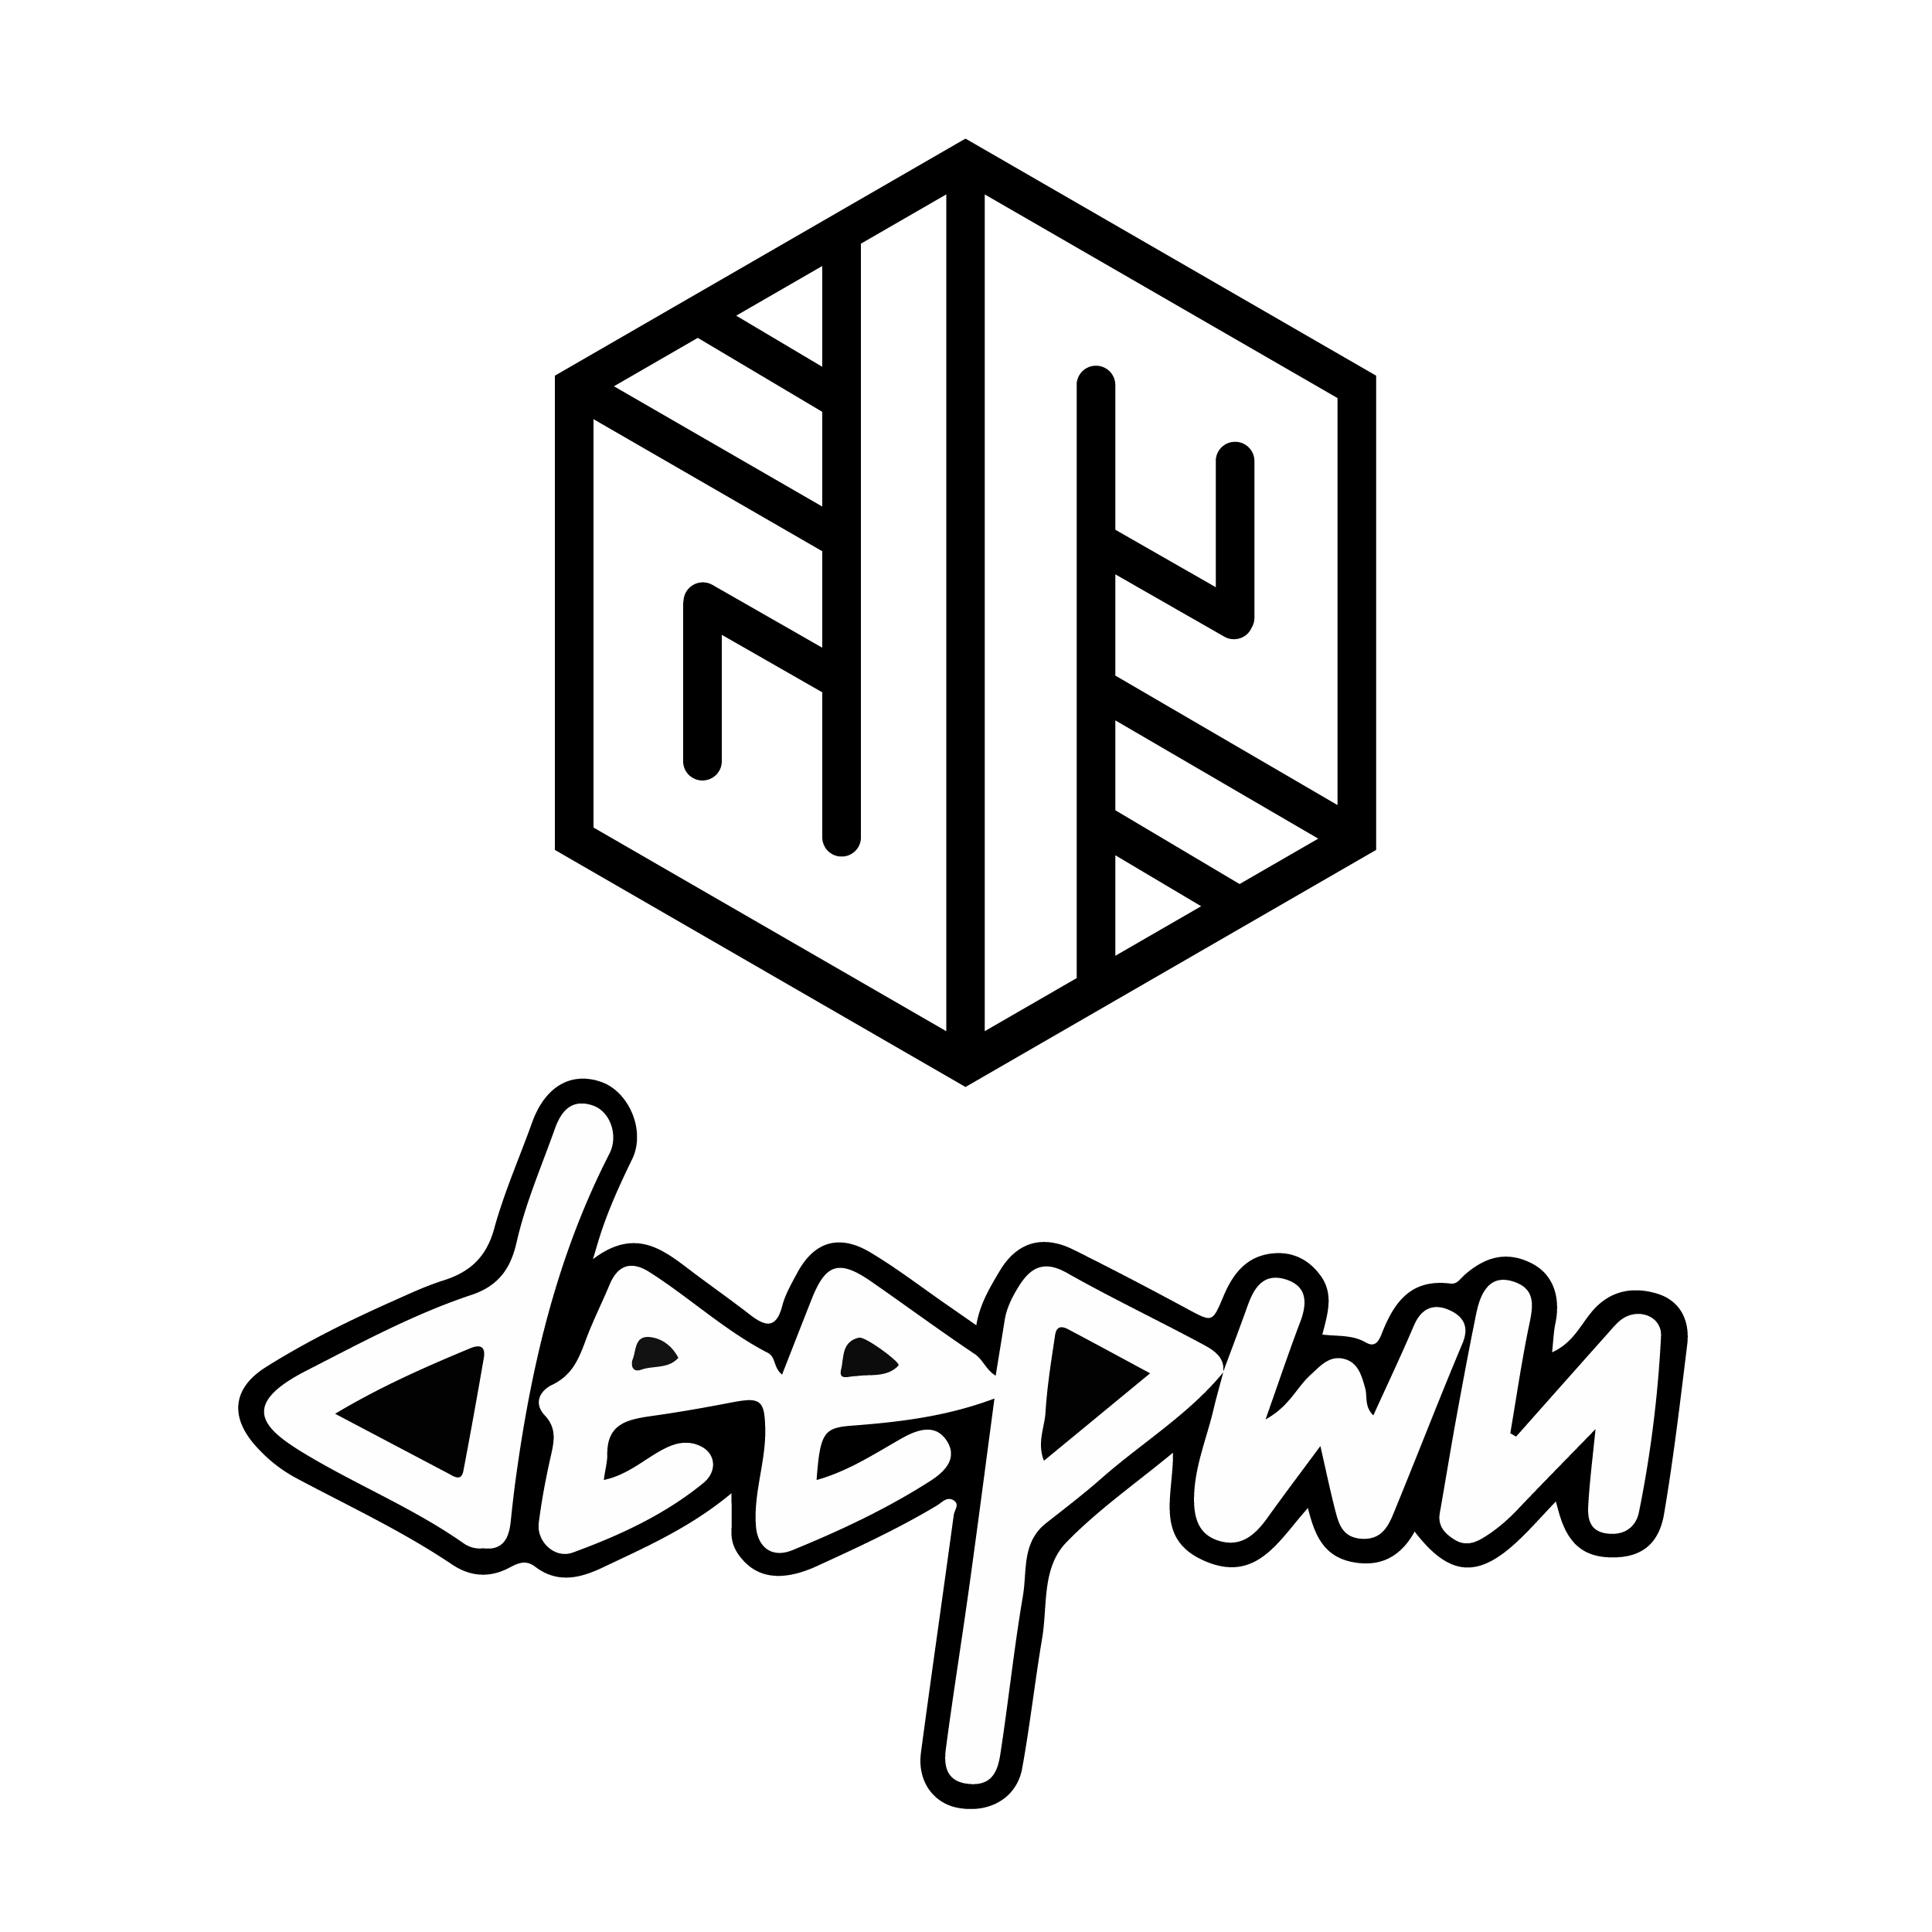 deepwn1-01.png